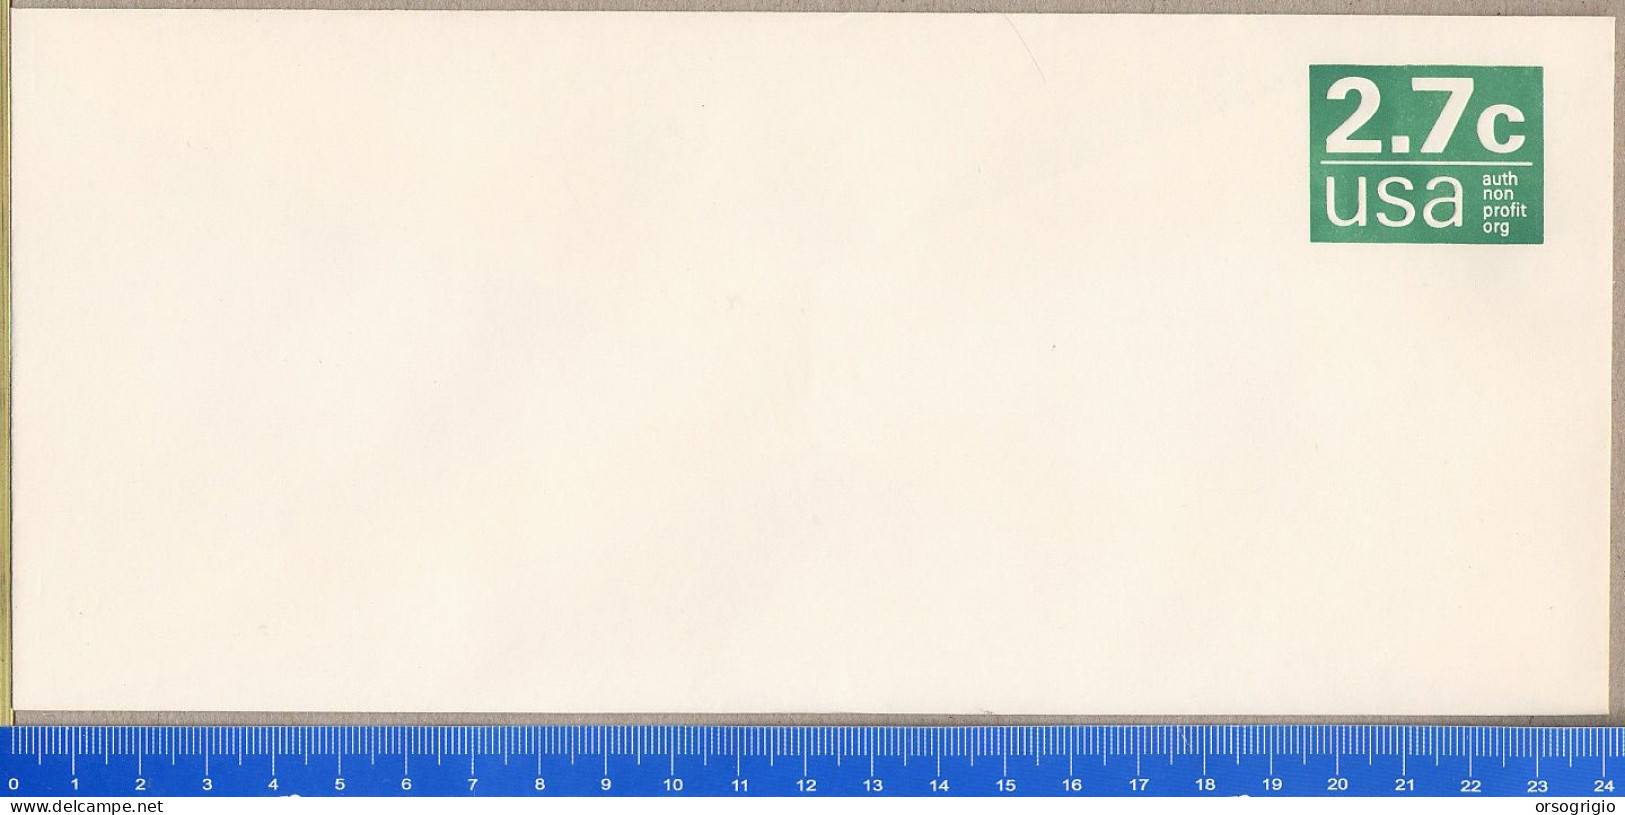 USA - Intero Postale - Stationery - AUTHORIZED  NON  PROFIT - 1961-80